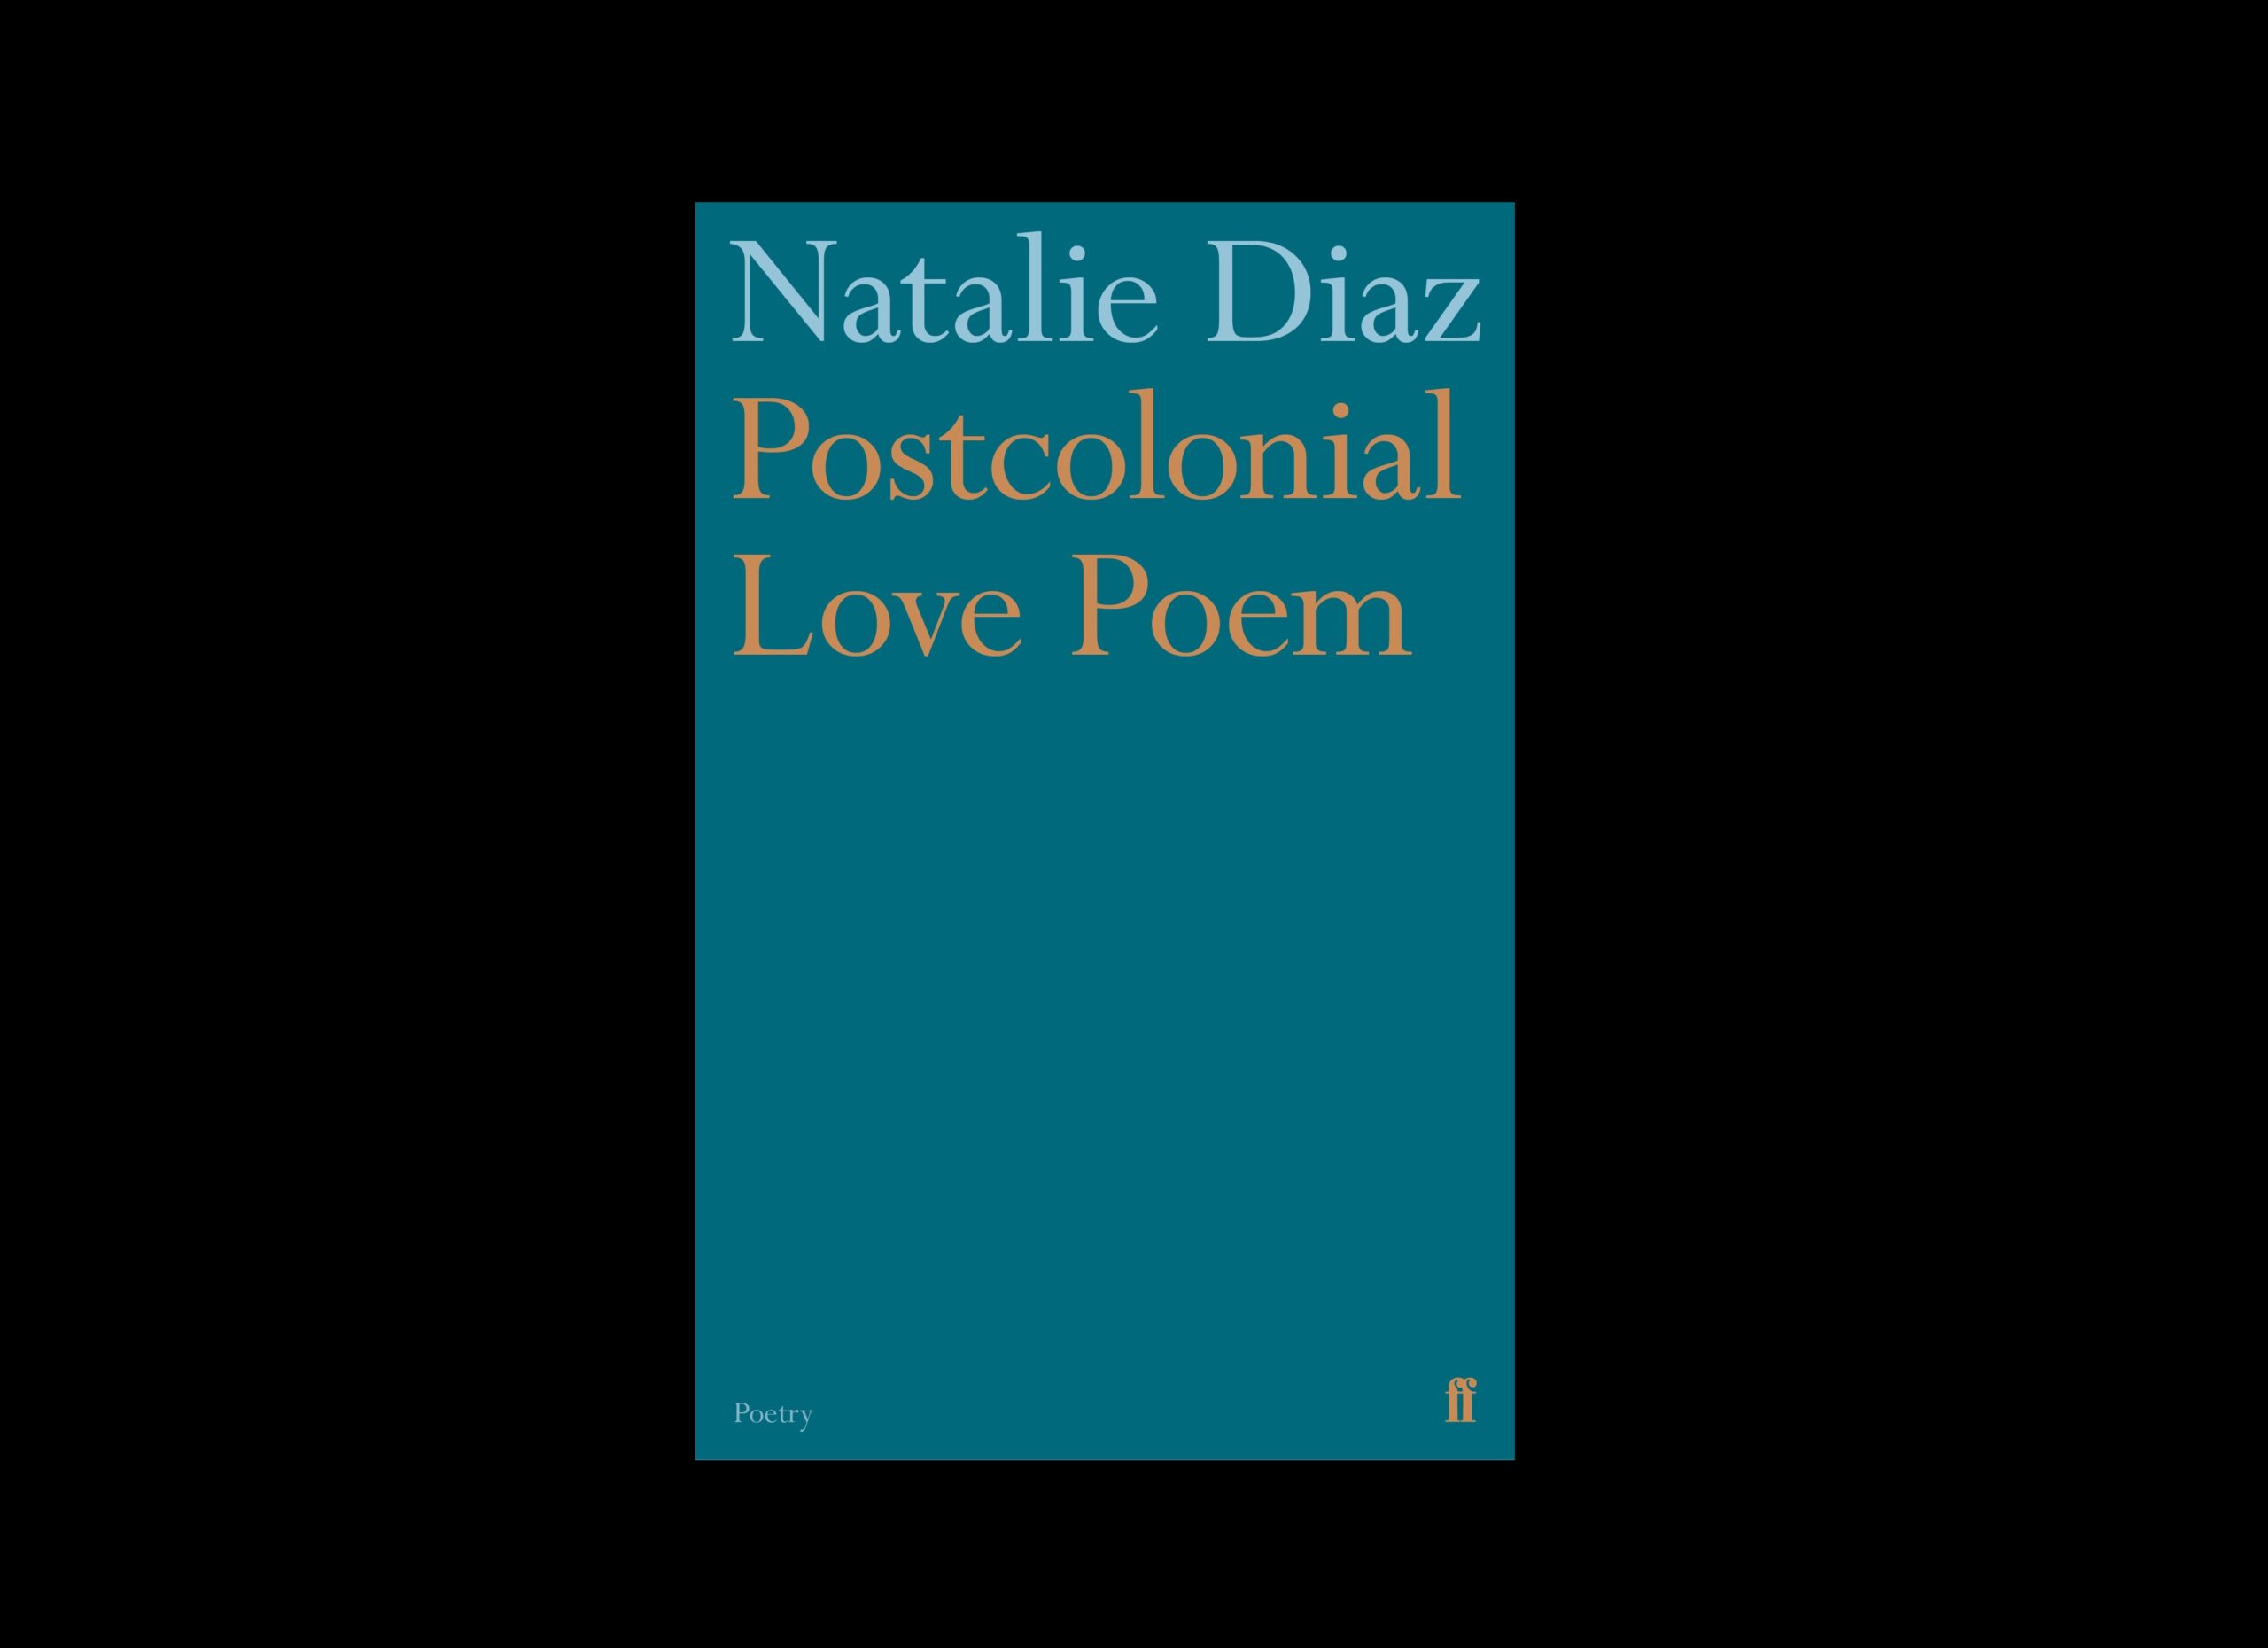 On Natalie Diaz’s ‘Postcolonial Love Poem’